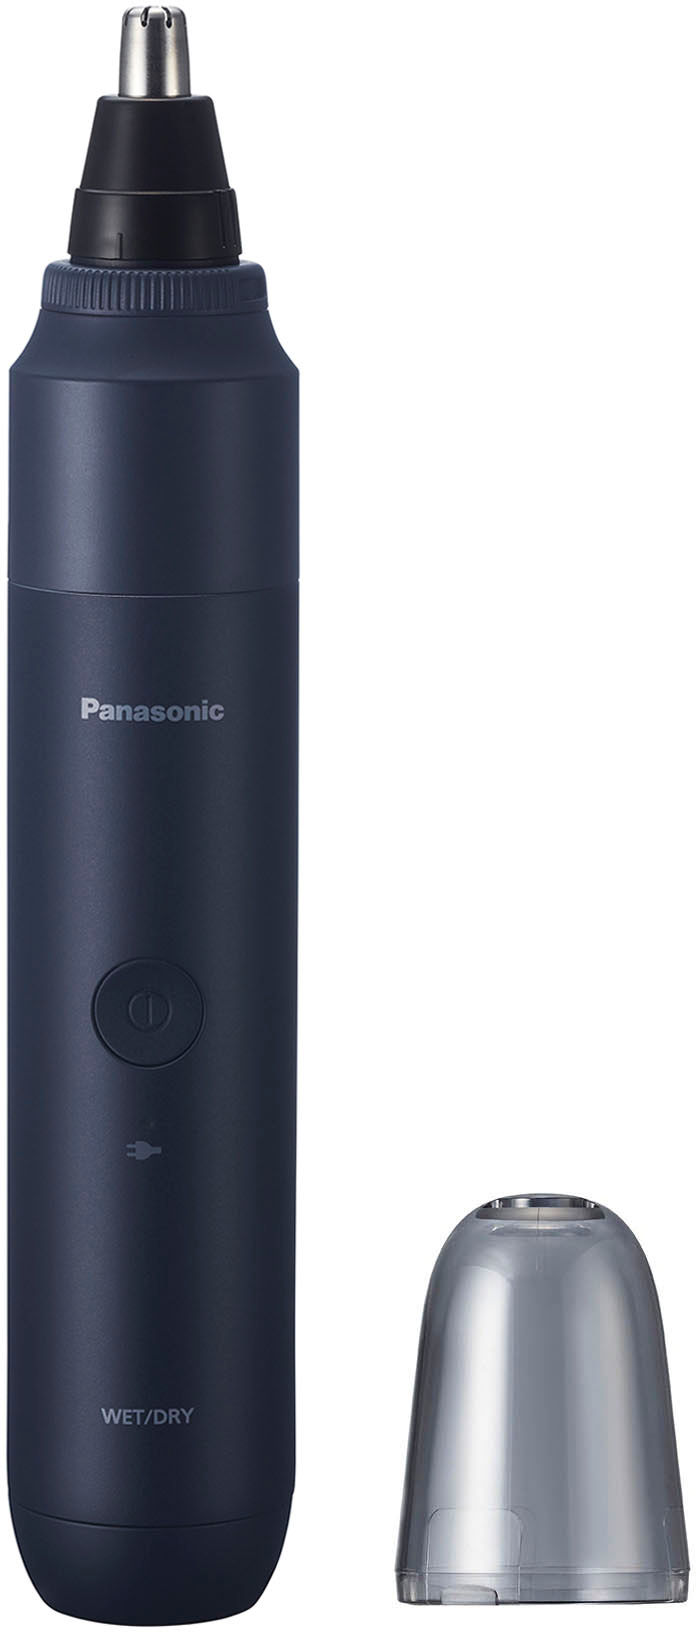 Panasonic MultiShape Rechargeable Pristine Kit Buy Wet/Dry Best - Navy ER-PRISTINE-BB Electric All 1 Shaver in Kit